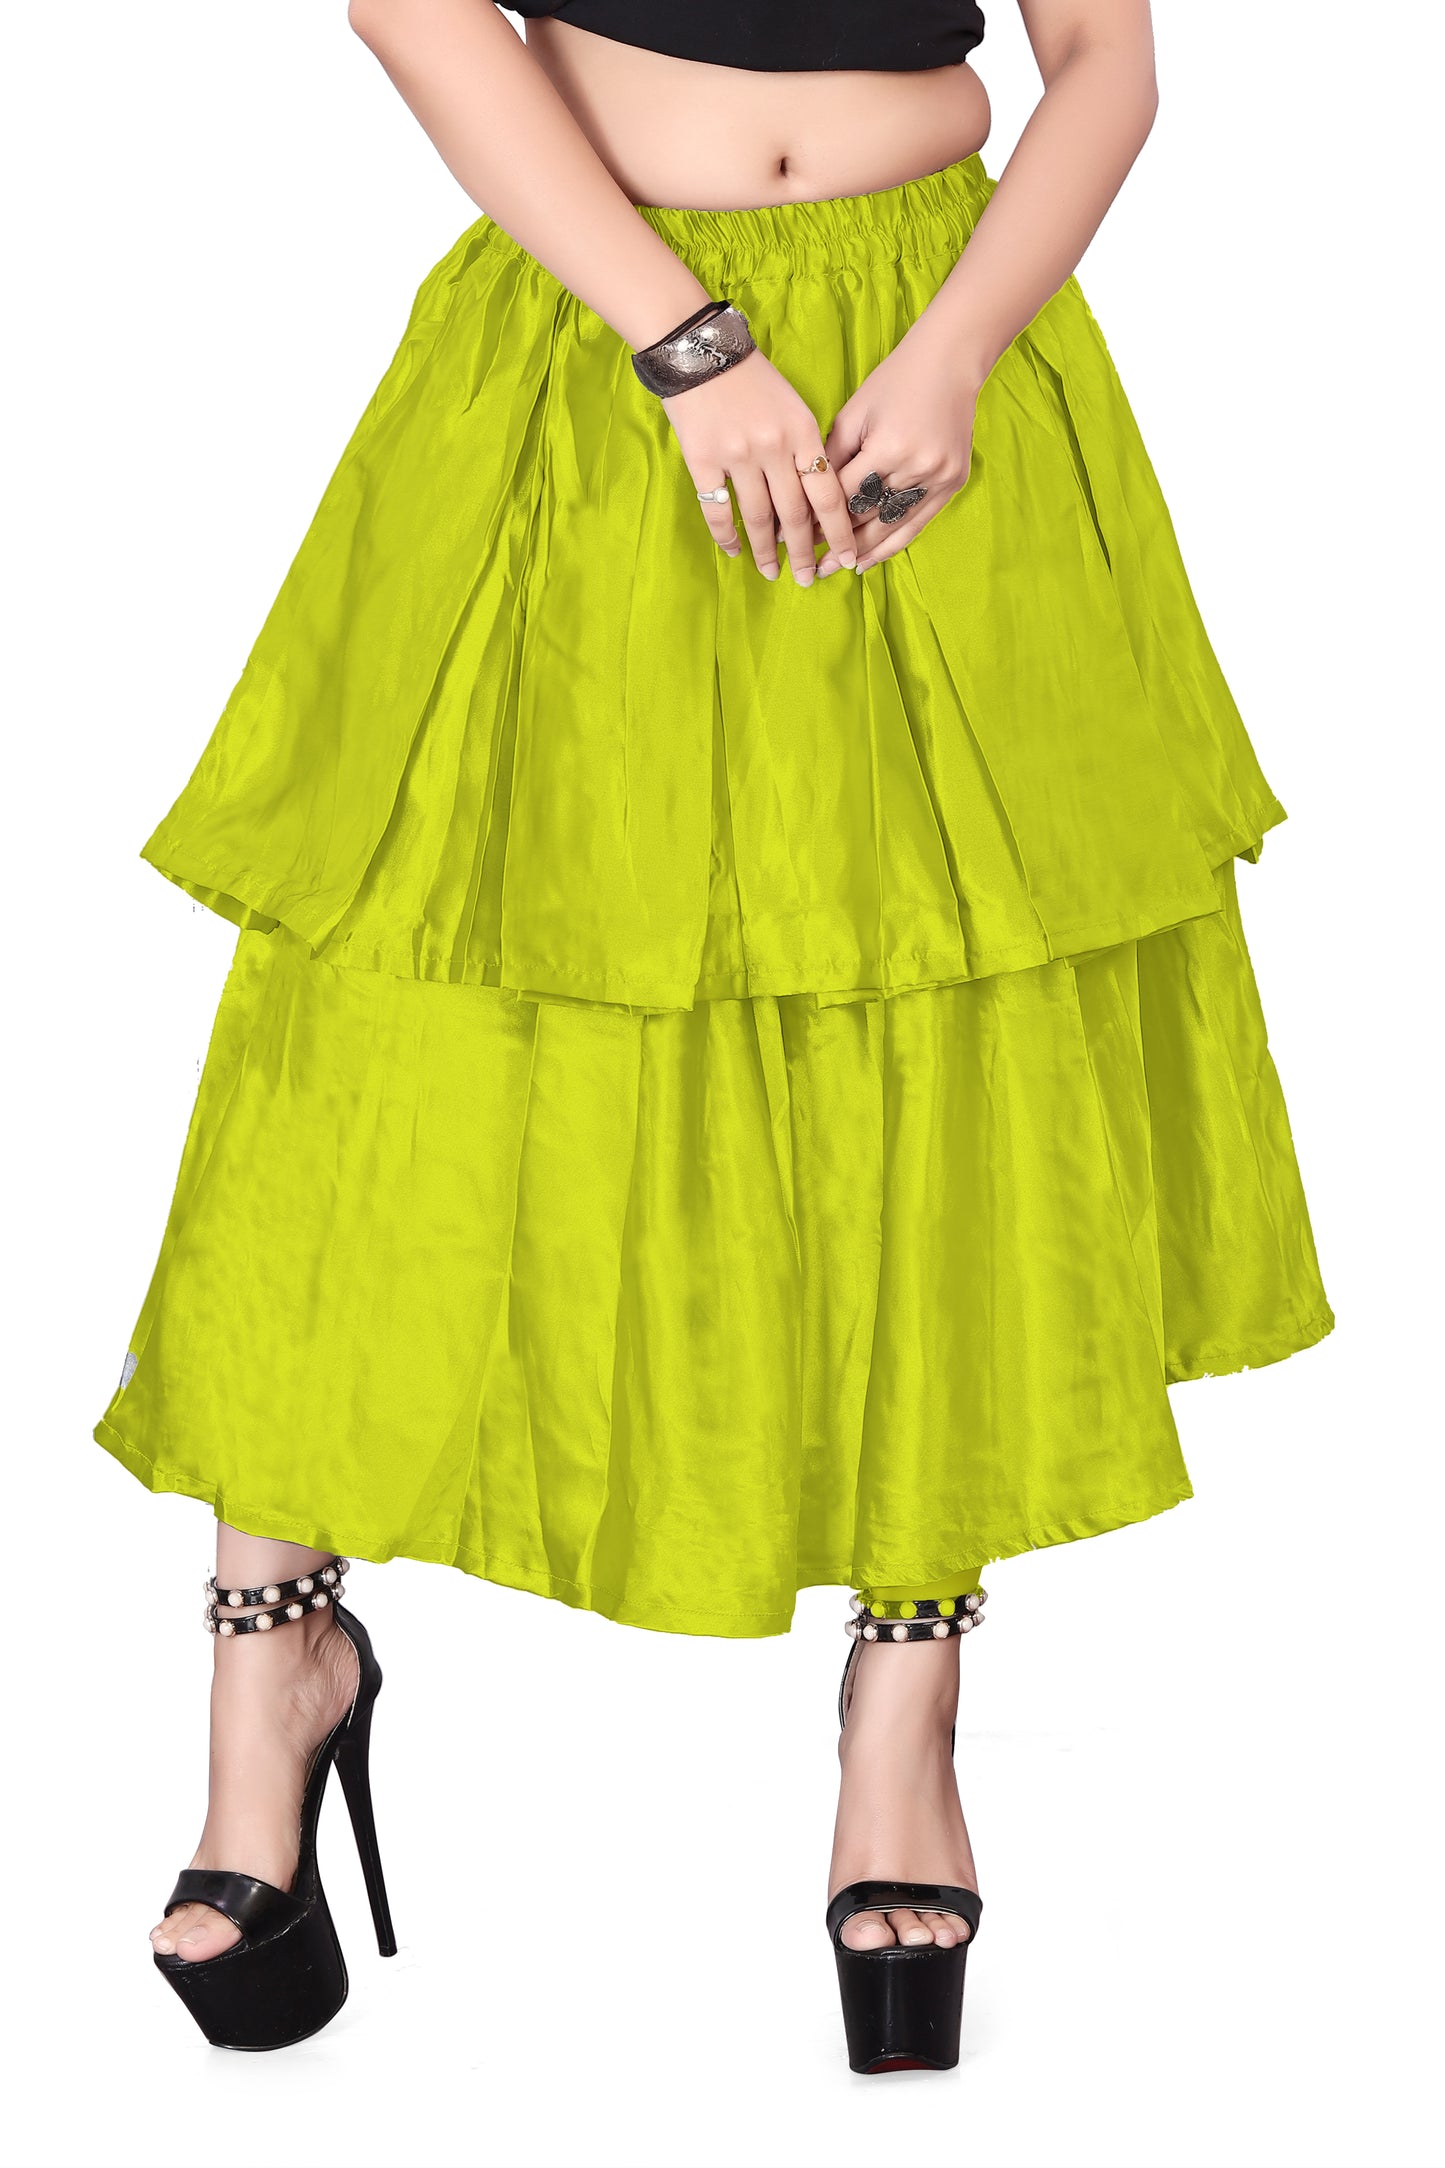 Satin 2 Layer Party wear Skirt S101-Regular Size 1